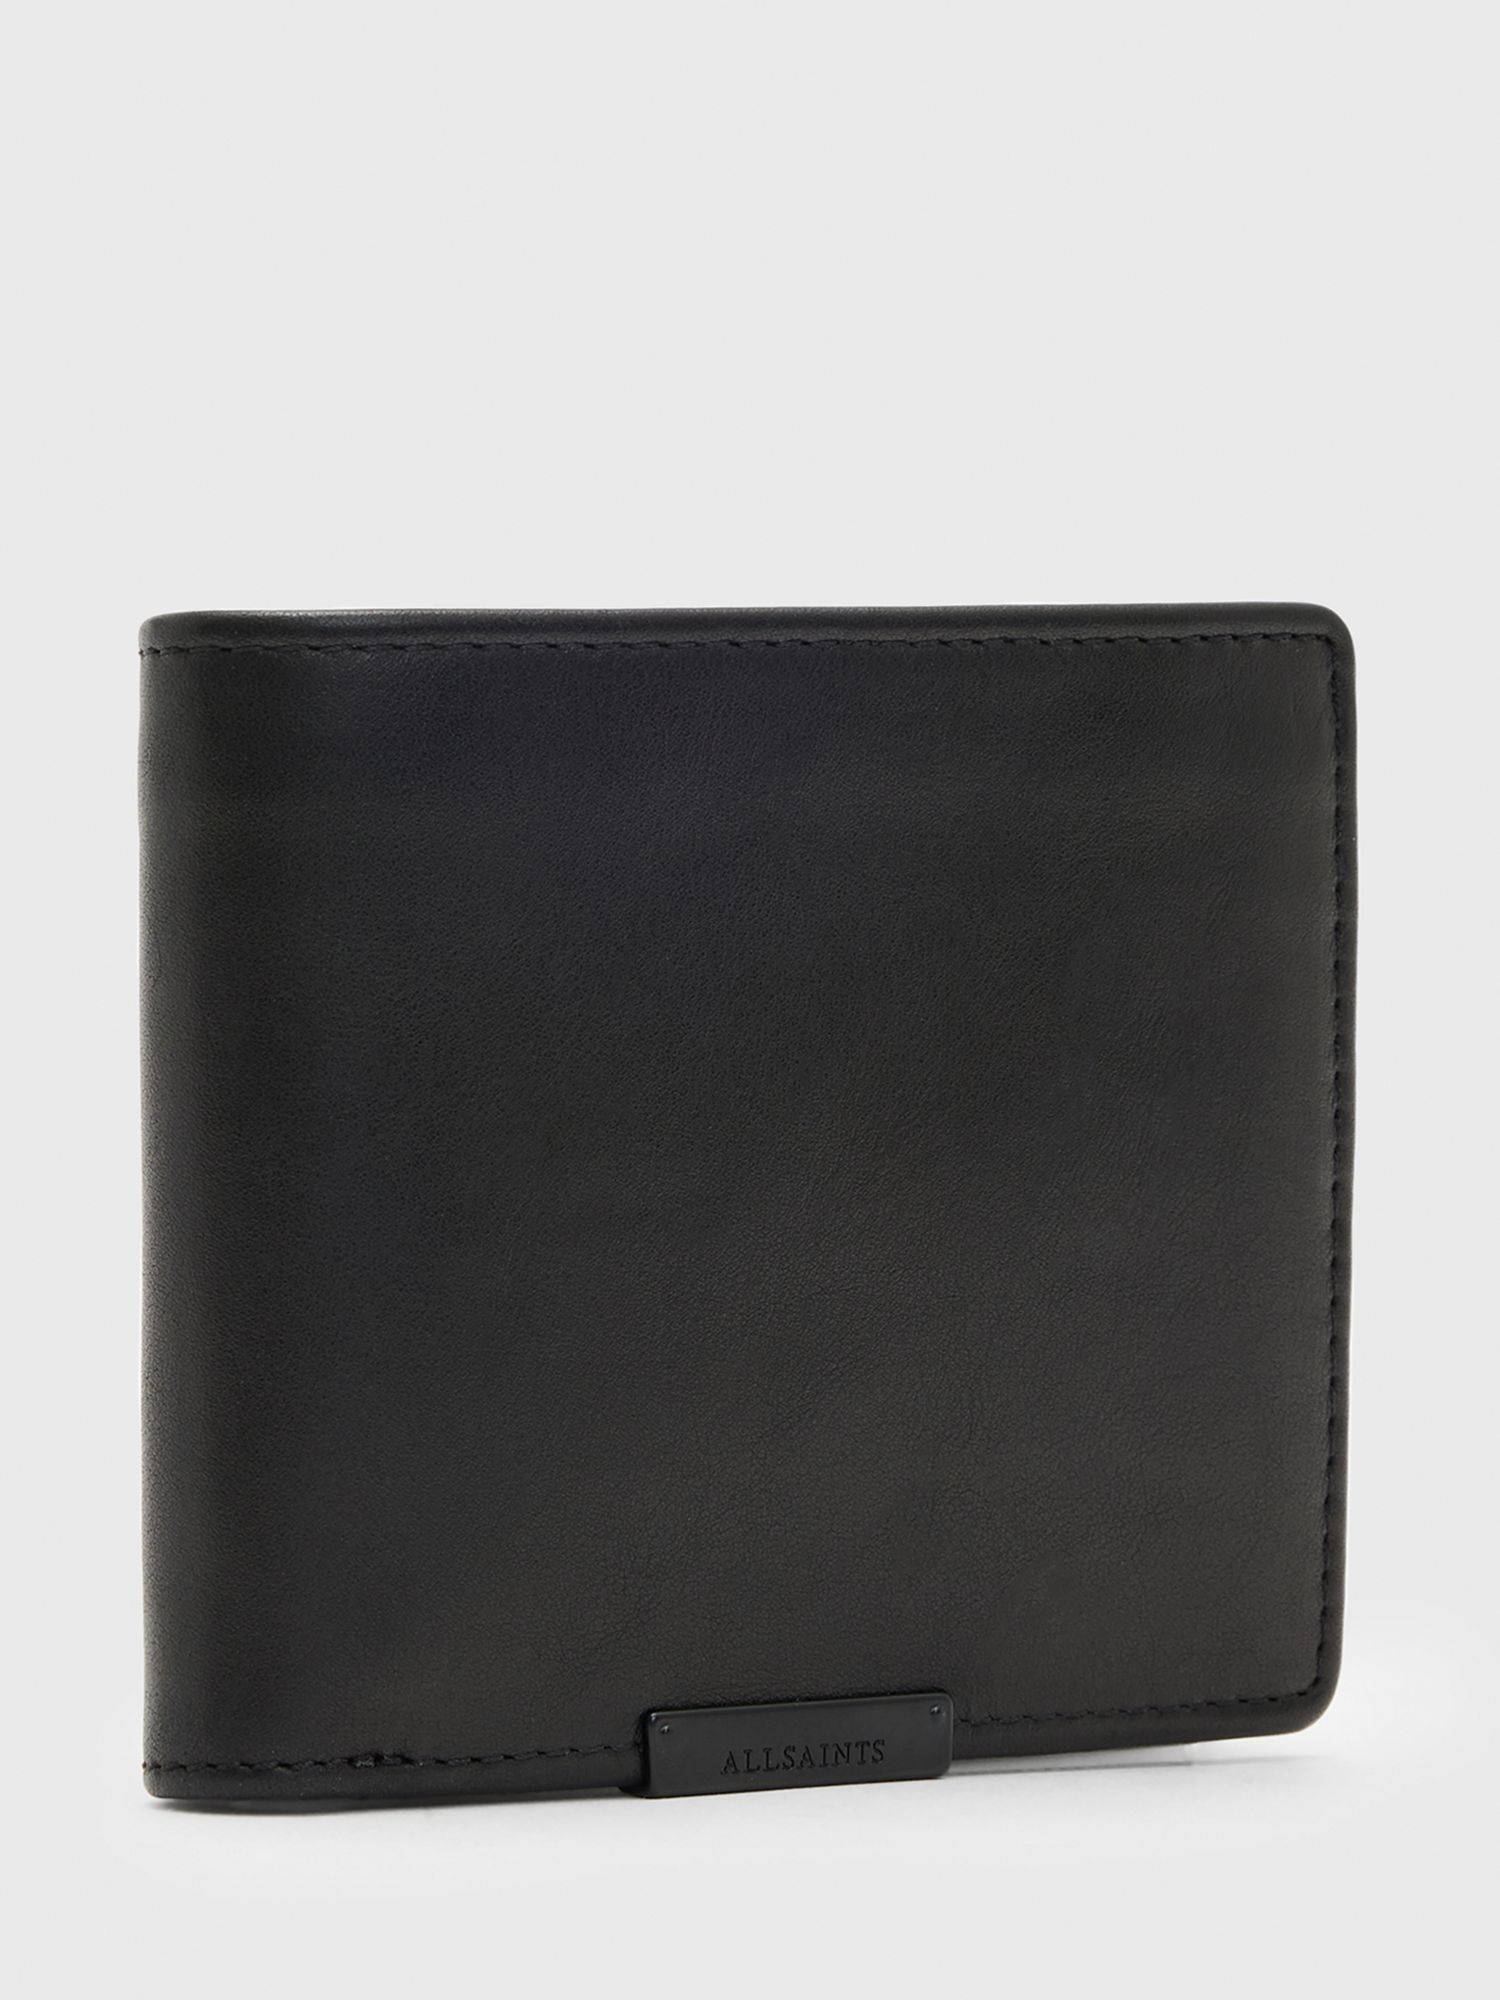 AllSaints Blyth Wallet, Black, One Size